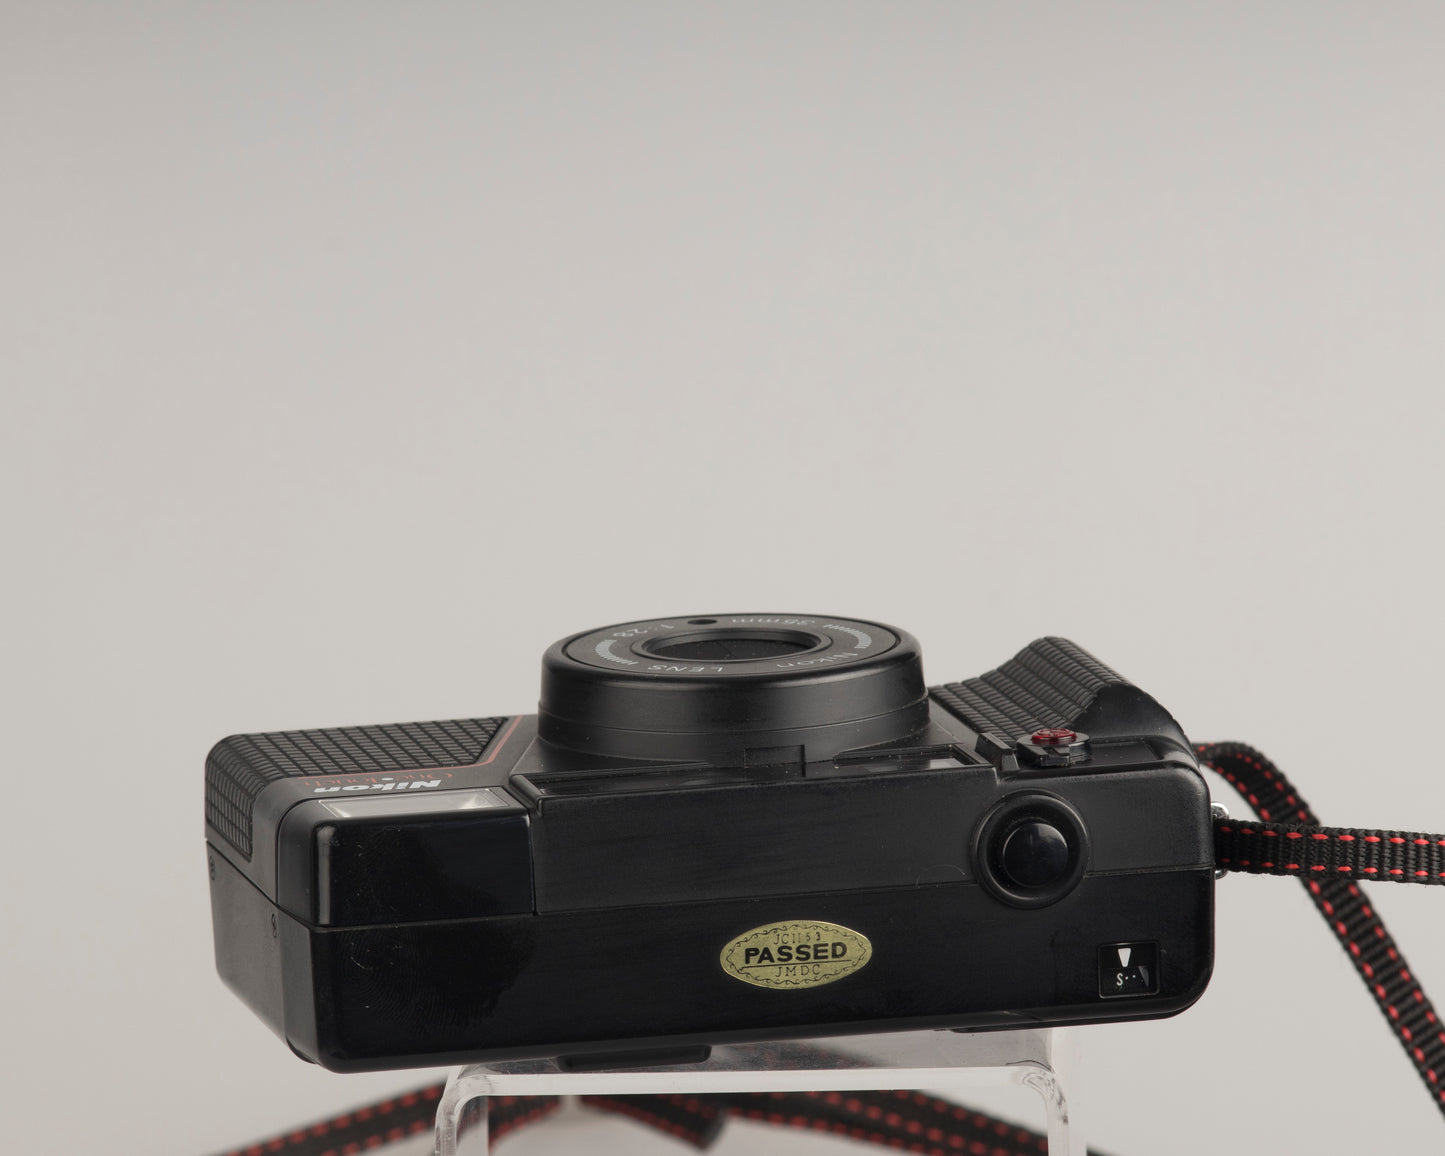 Nikon One Touch (L35AF2) 35mm camera serial number 6107346